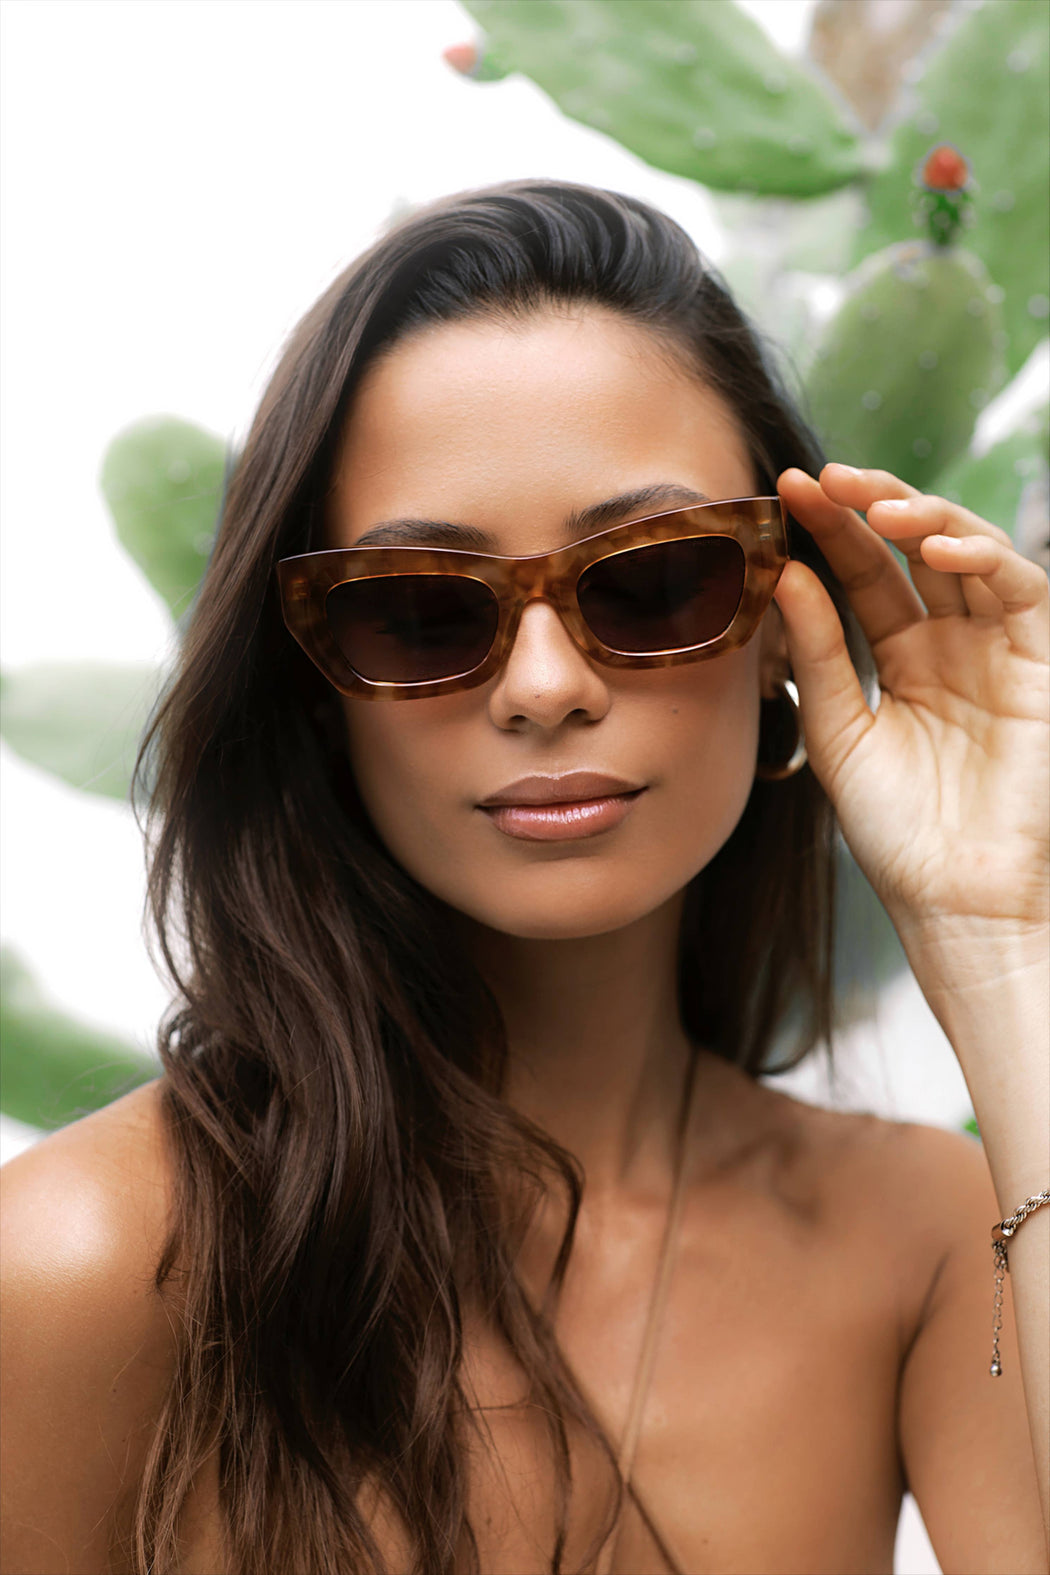 Selina Womens Acetate Cat Eye Sunglasses: Amber Tortoise